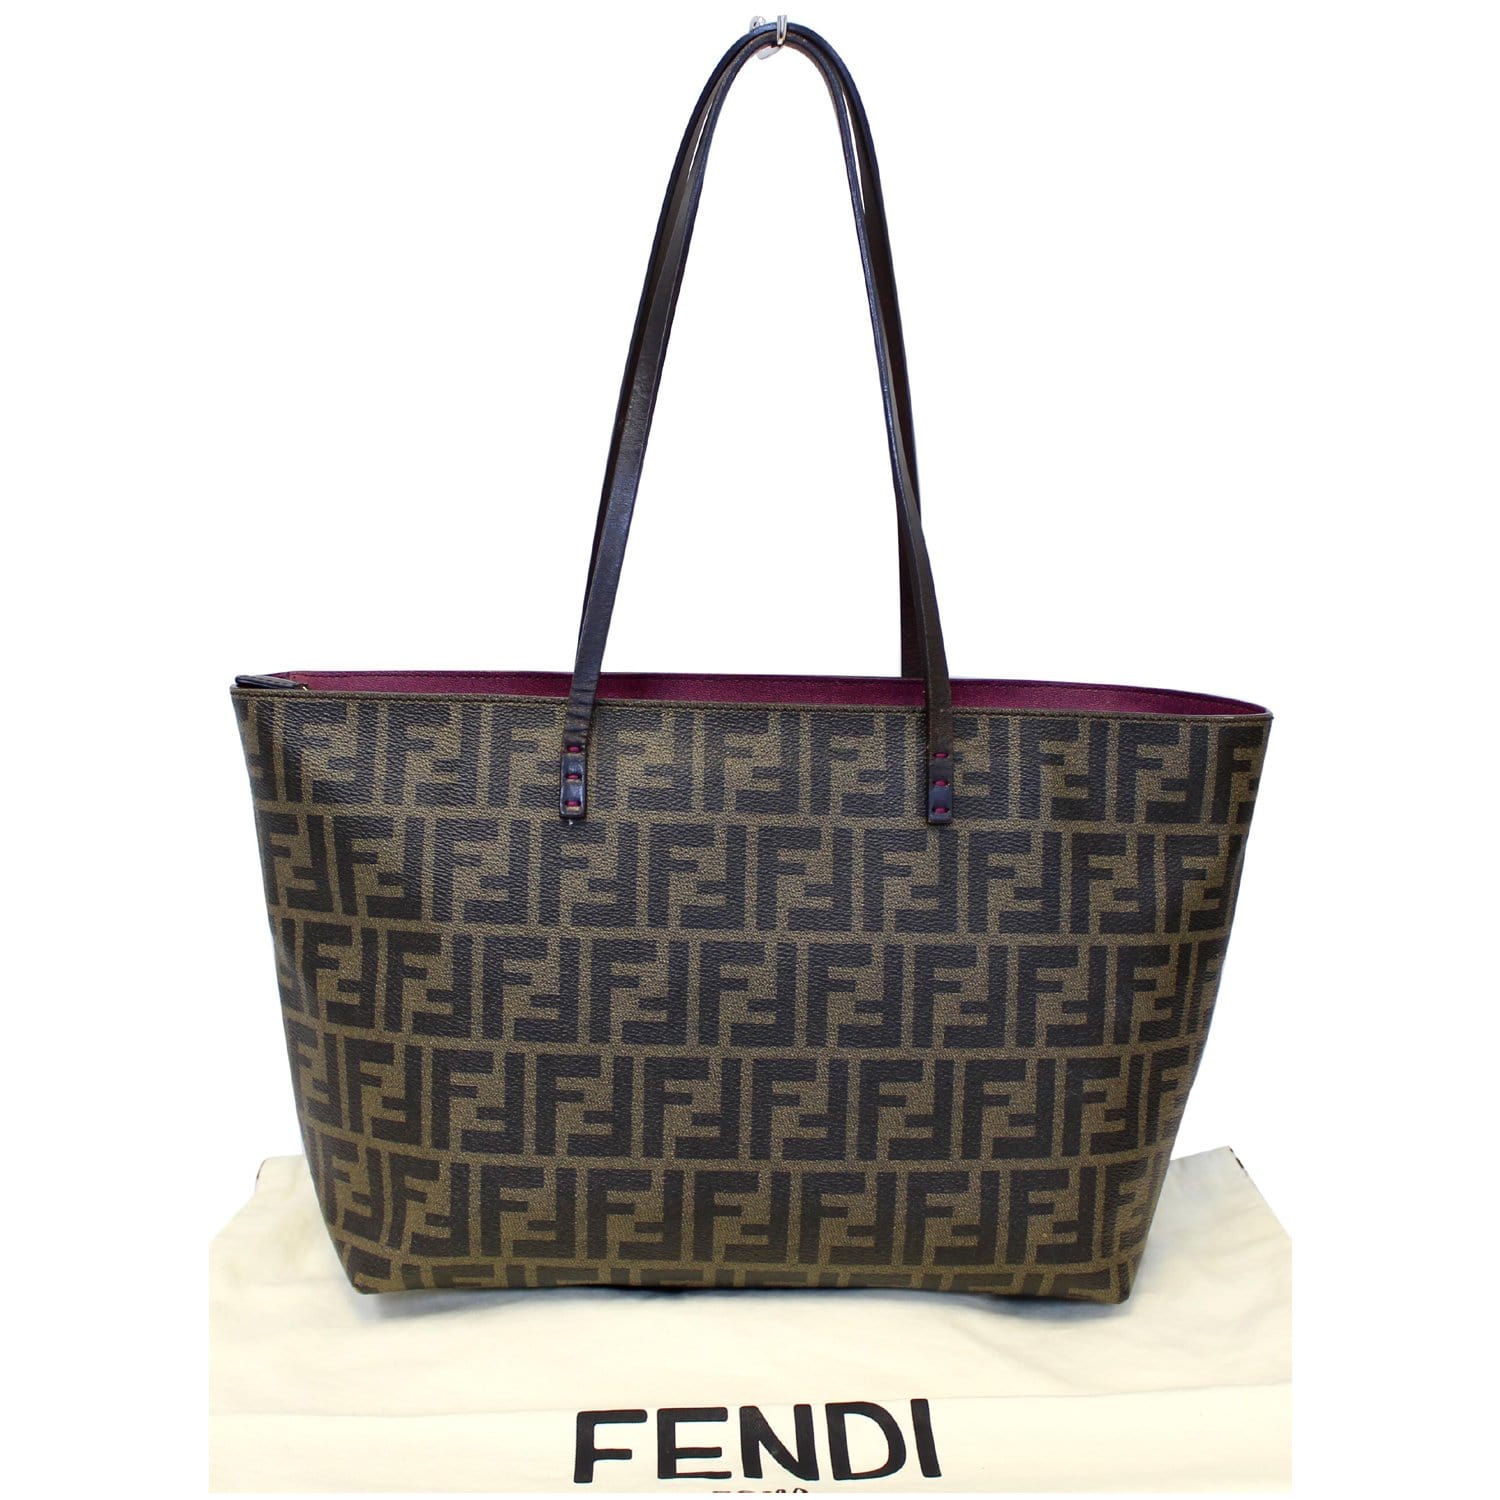 FENDI-Zucca-Logo-Print-PVC-Leather-Tote-Bag-Multi-Color-8BH185